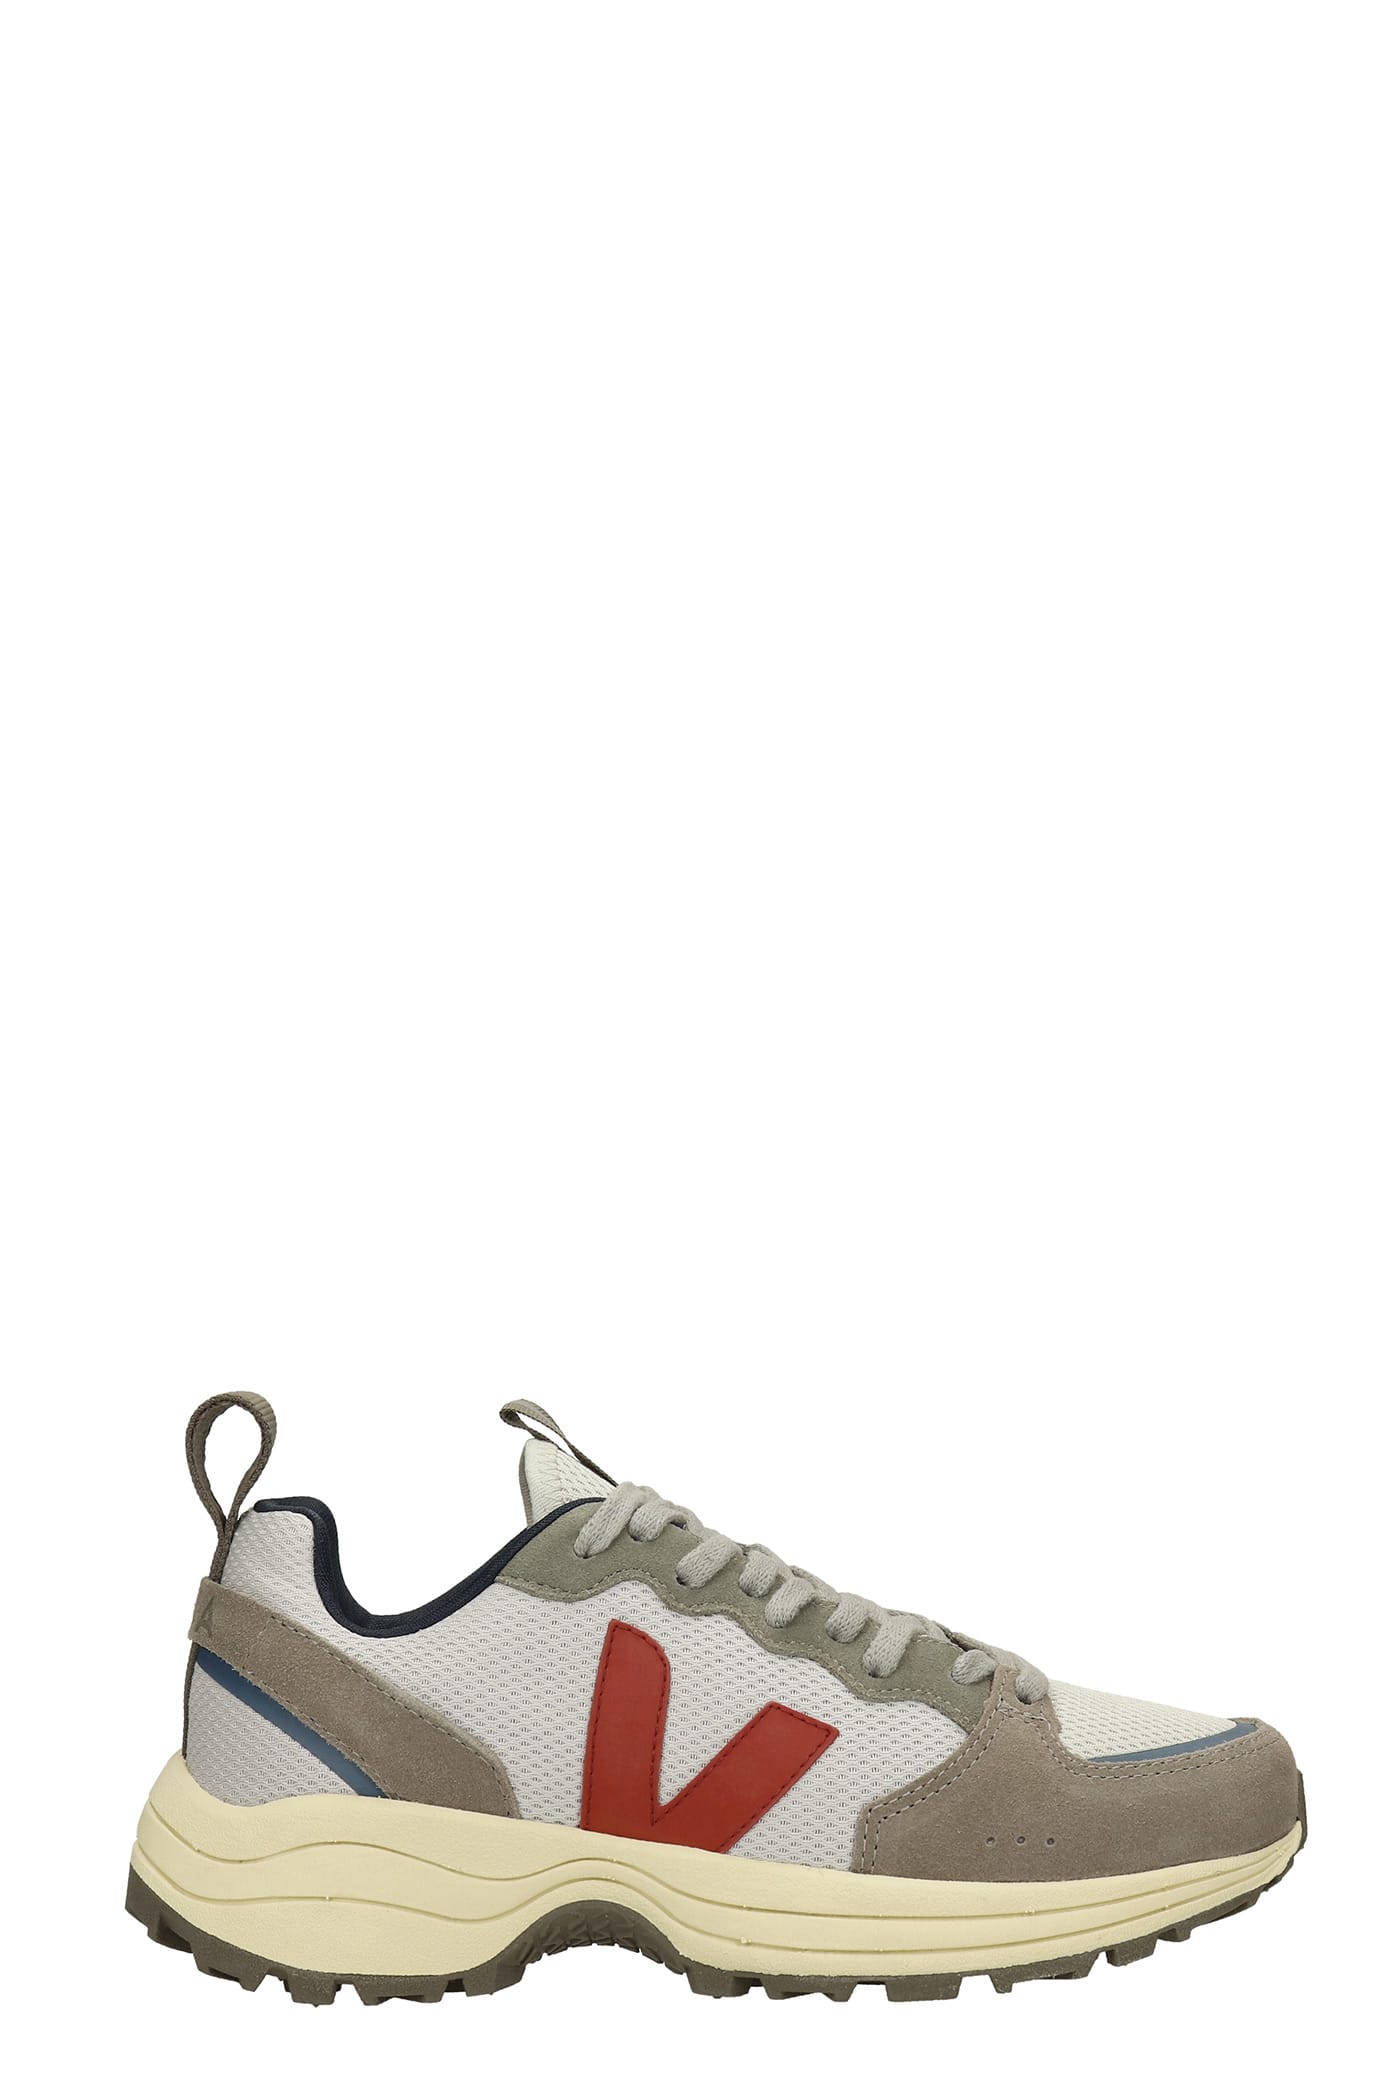 Veja Venturi Sneakers In Grey Suede And Fabric